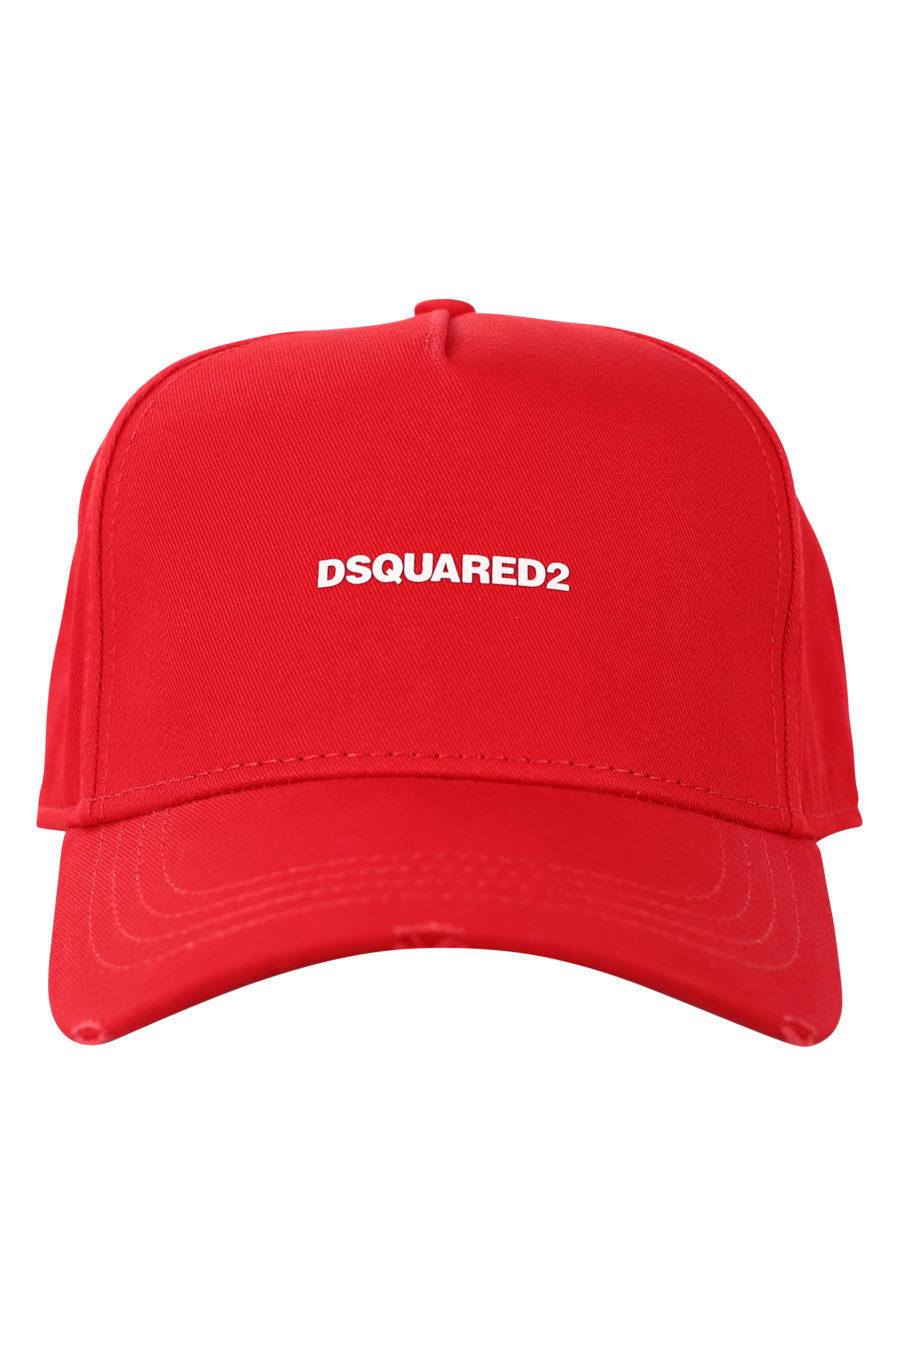 Gorra roja ajustable con logo blanco pequeño - IMG 0469